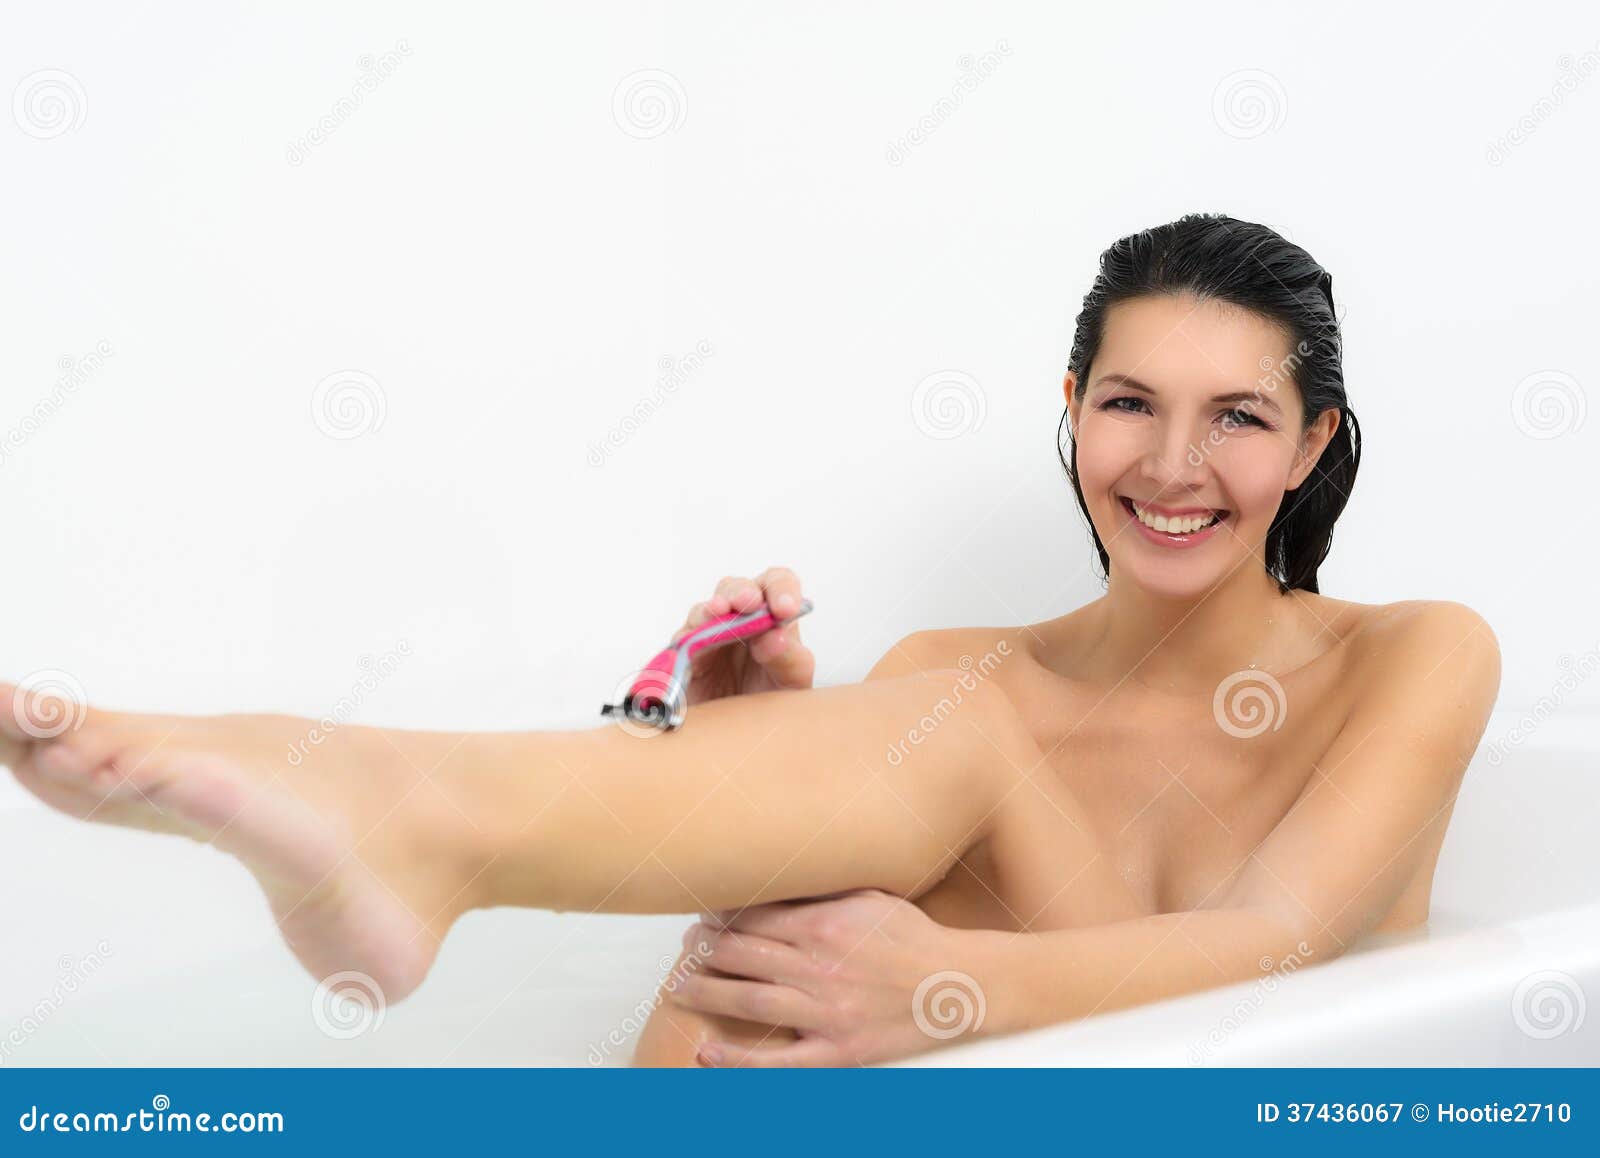 Nude Model Shaving Legs Diecast Model Train Repair